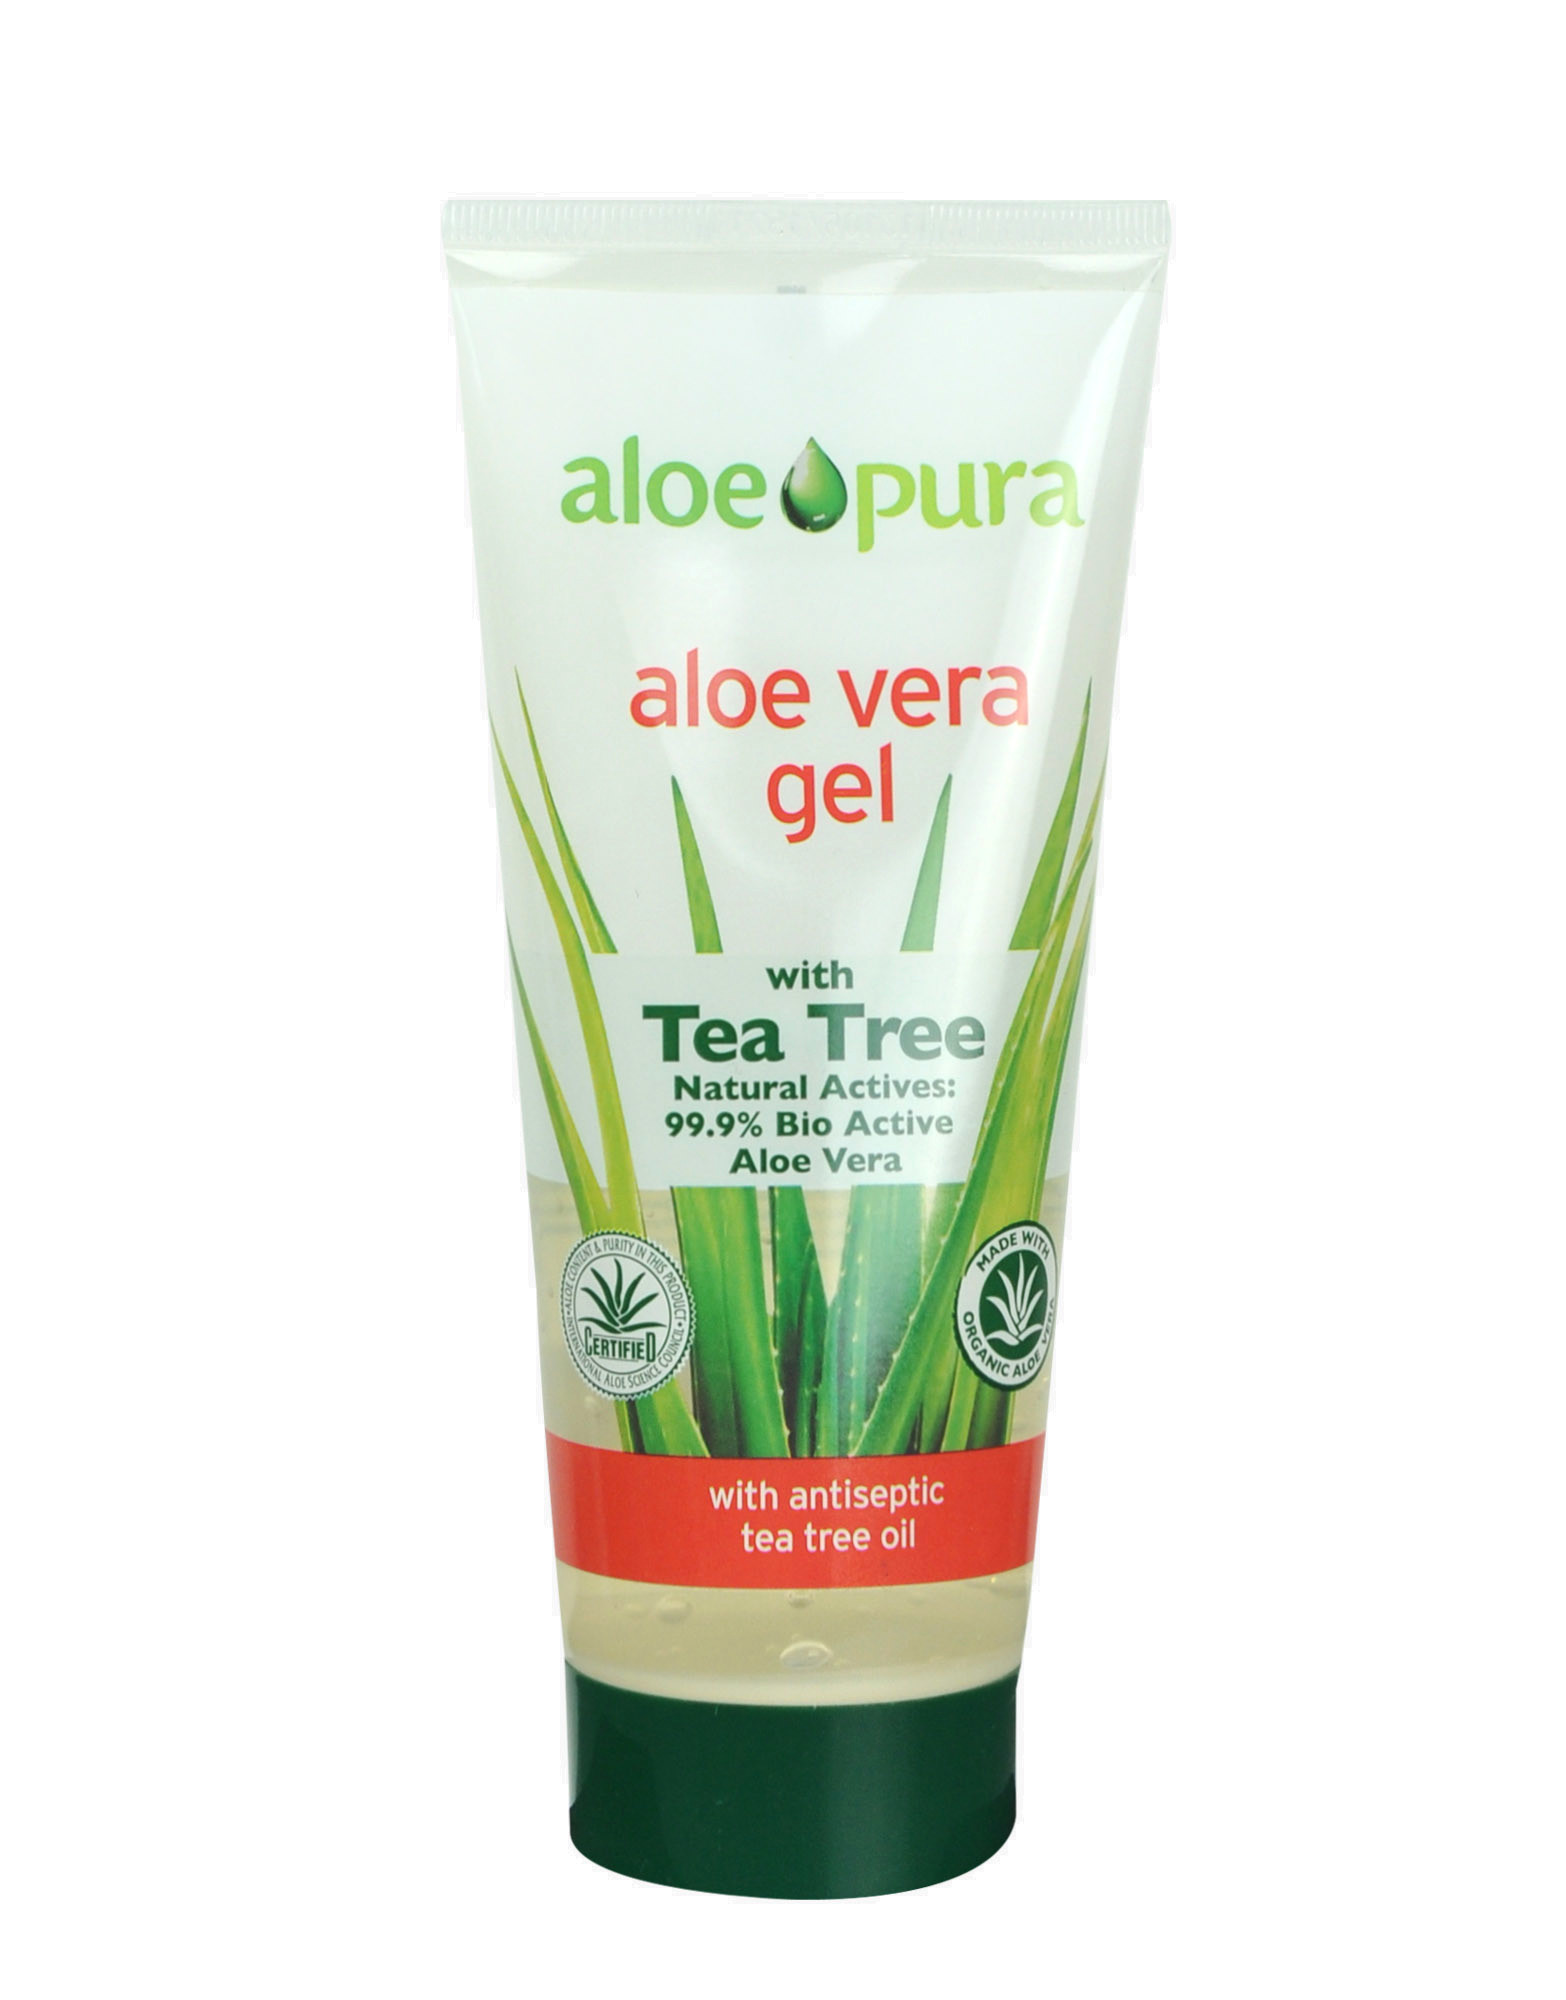 Aloe Pura - Aloe Vera Gel with Tree Oil by Optima, 200ml - iafstore.com